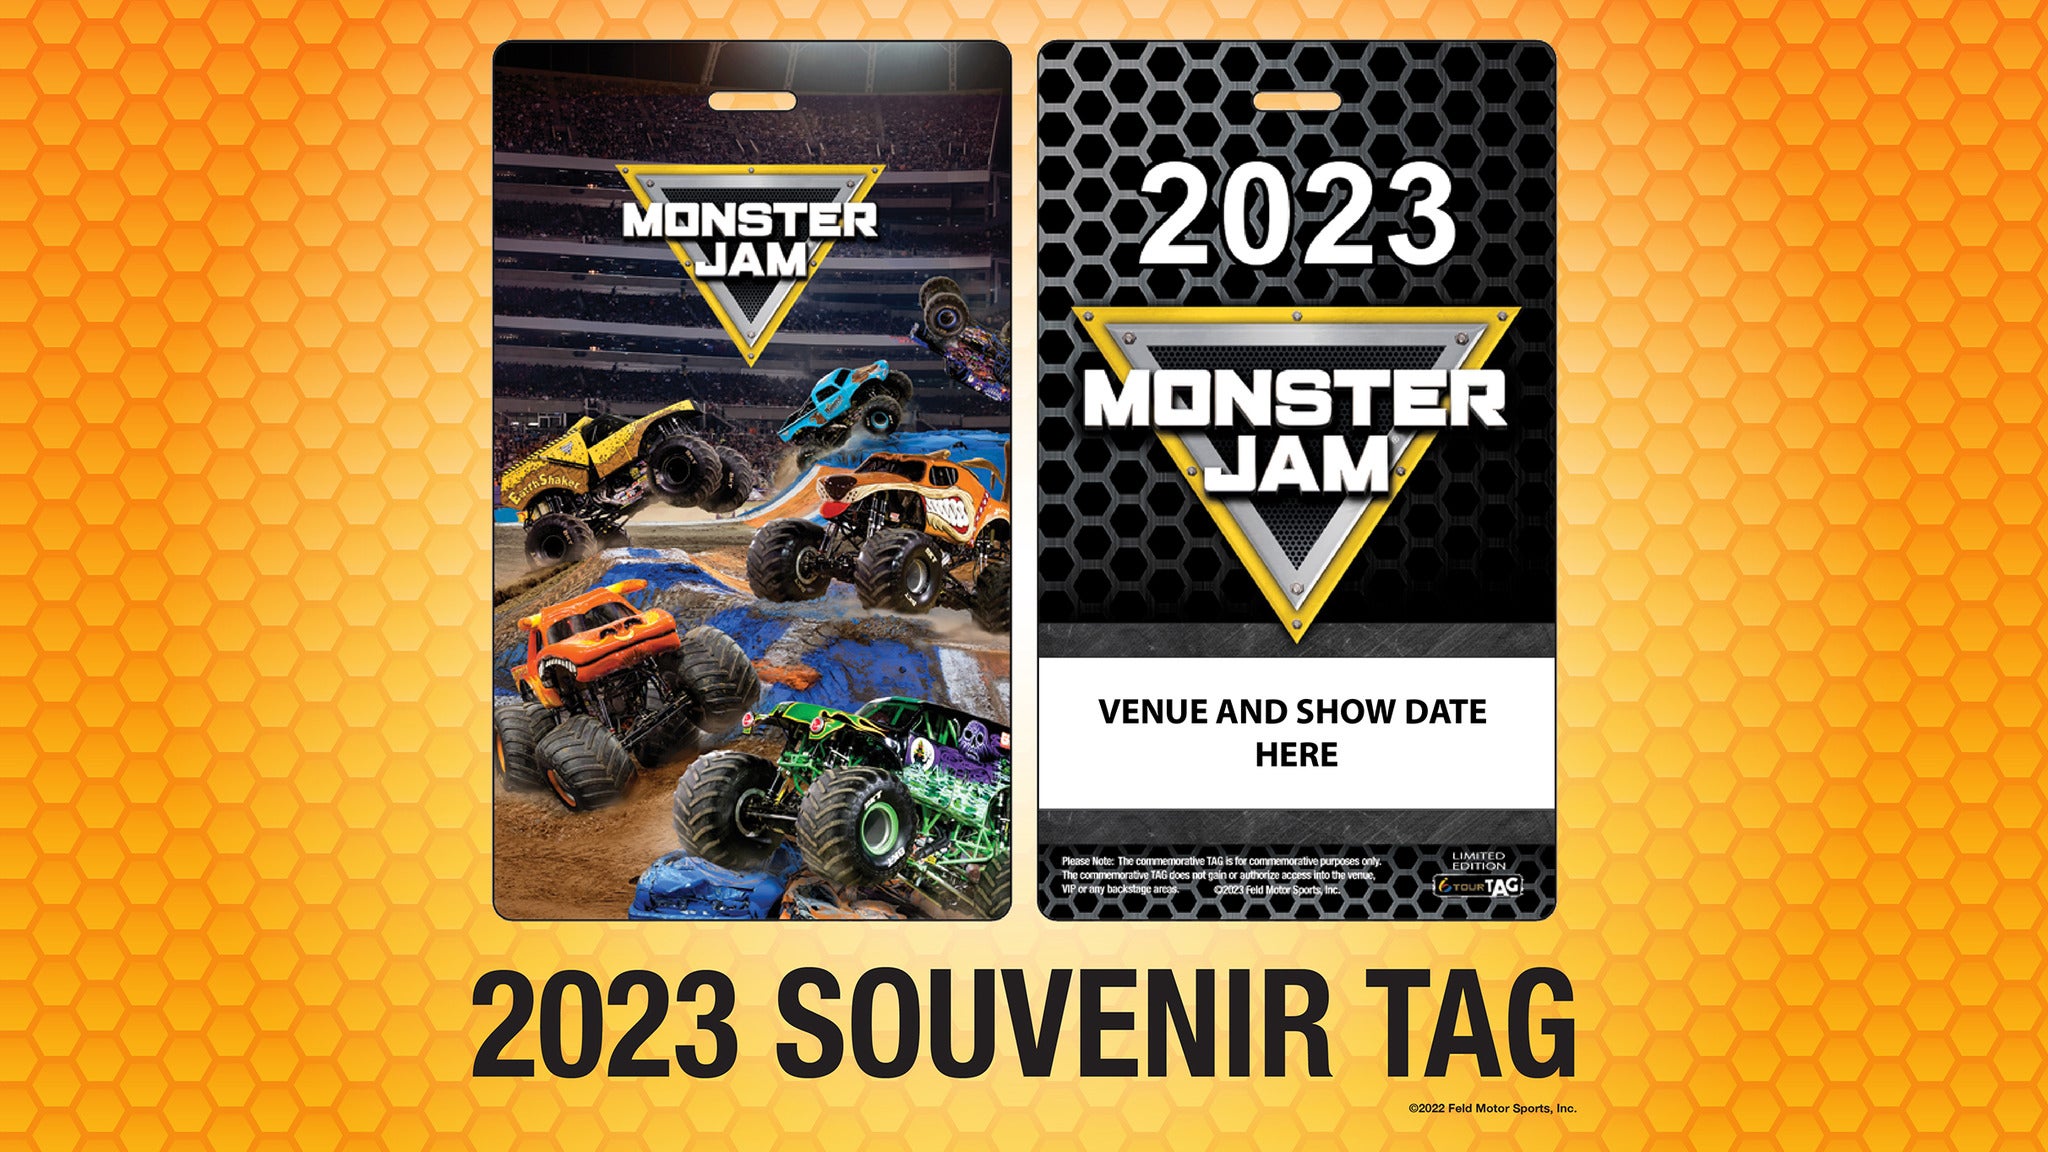 Monster Jam 2023 Official Souvenir Tag Tickets Event Dates